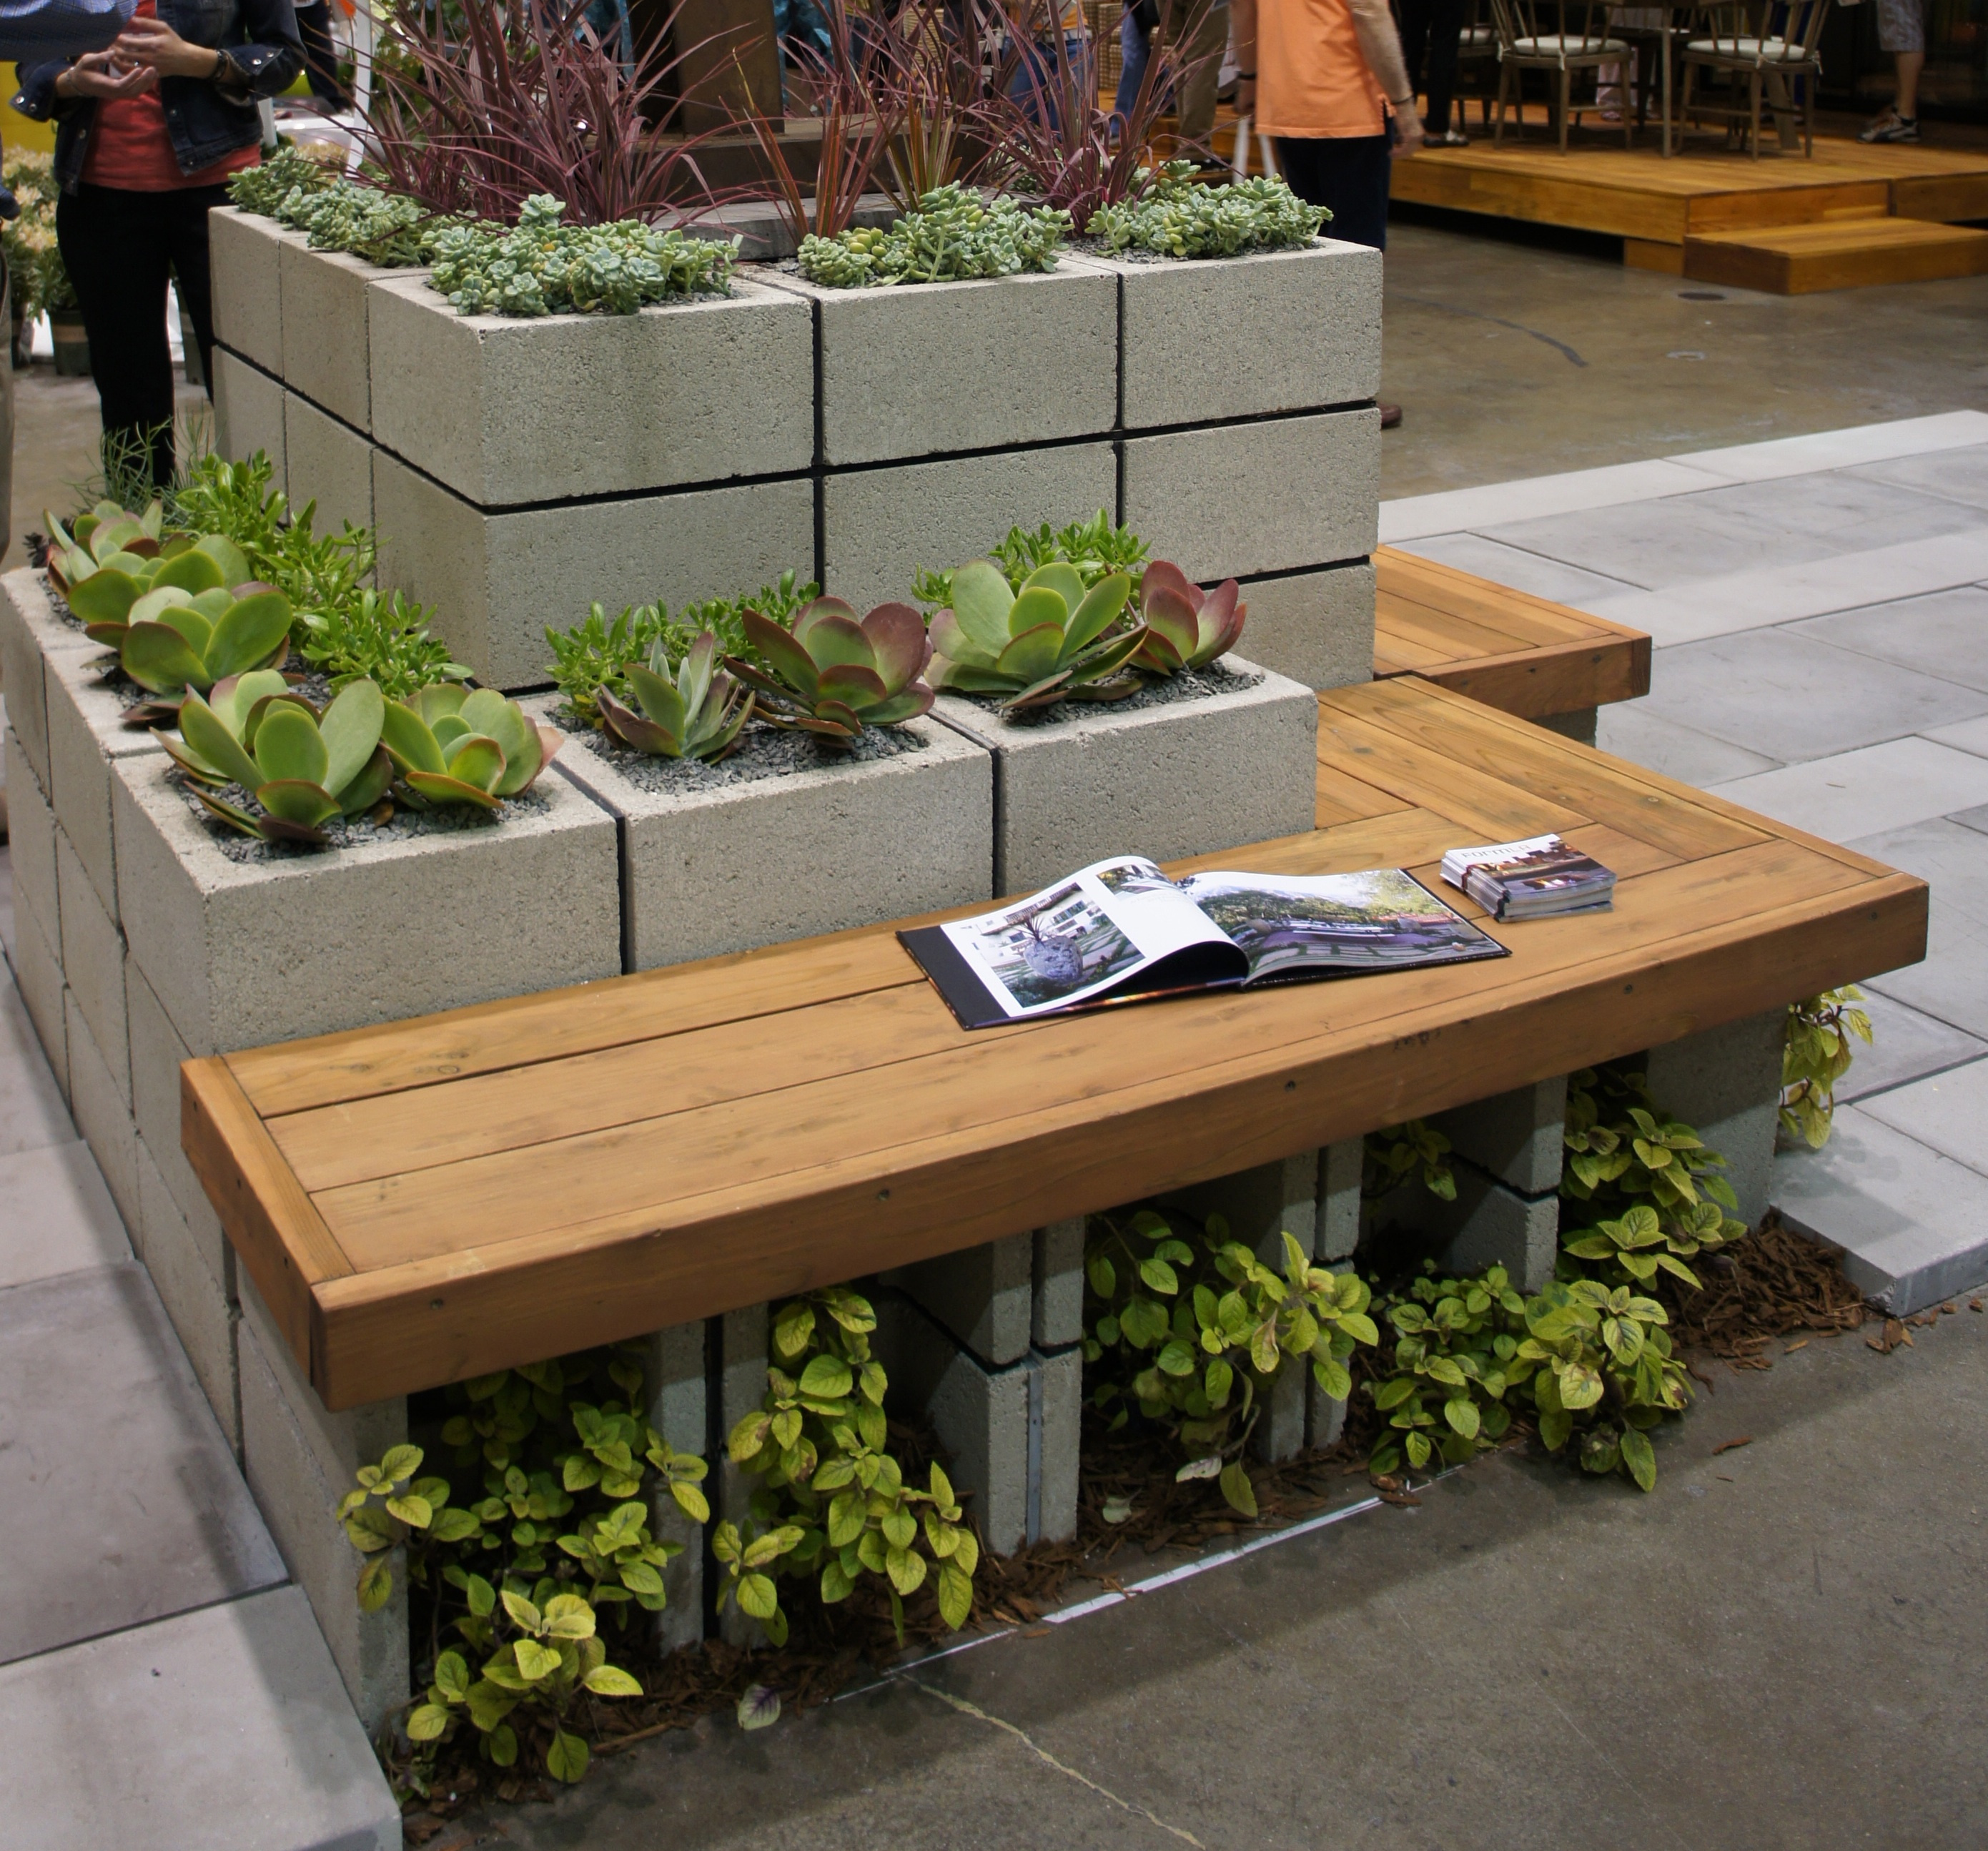 cinder-block-planter-with-bench.jpg